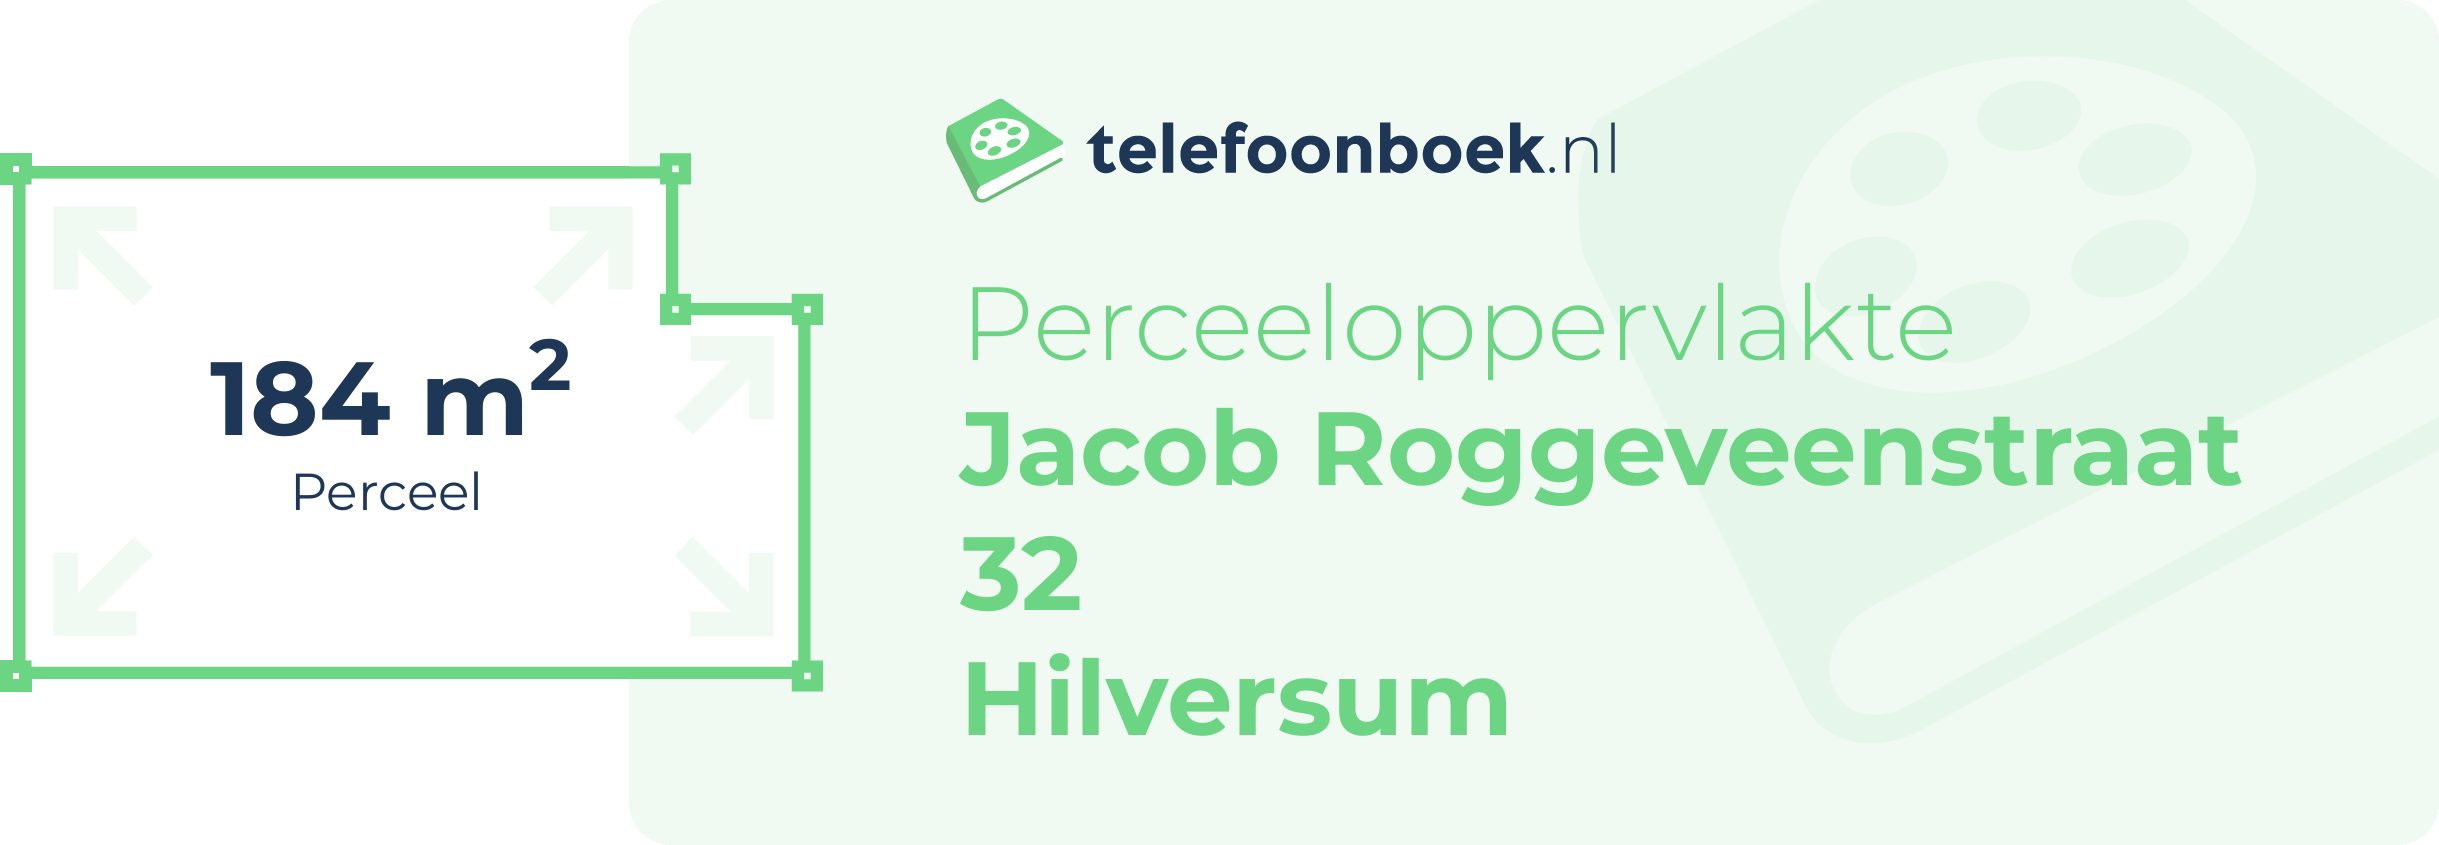 Perceeloppervlakte Jacob Roggeveenstraat 32 Hilversum